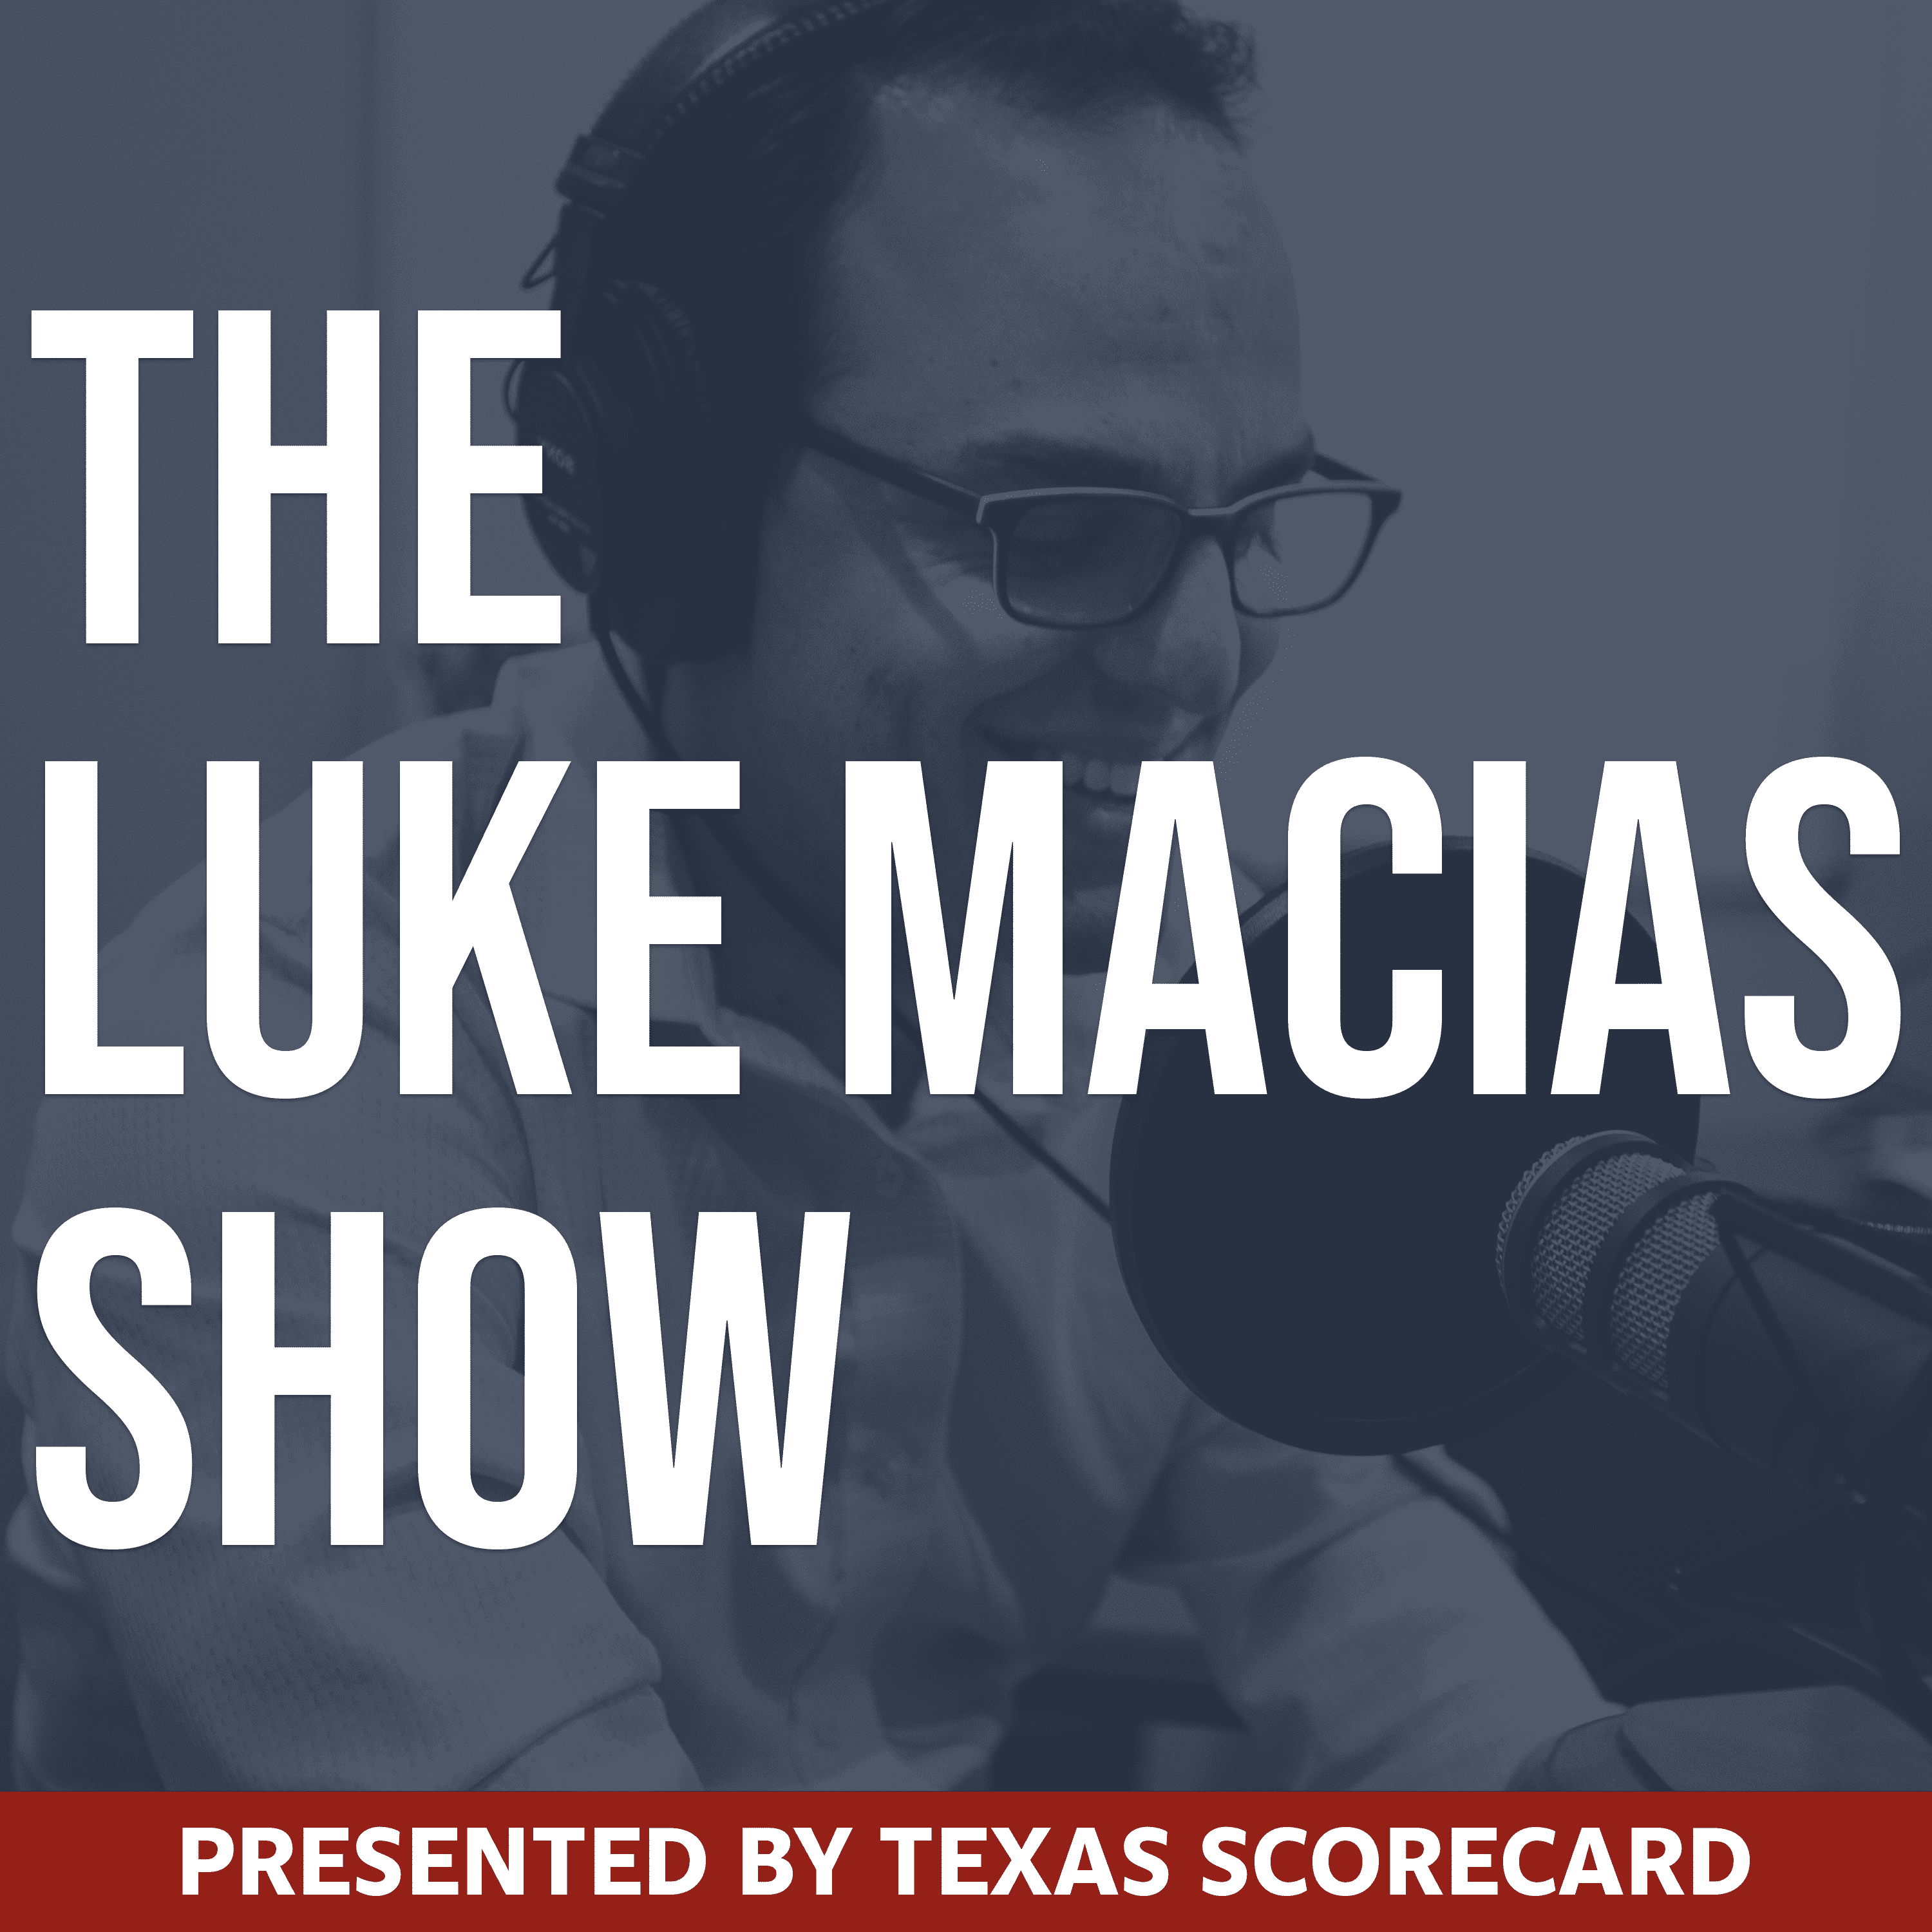 Luke Macias Show